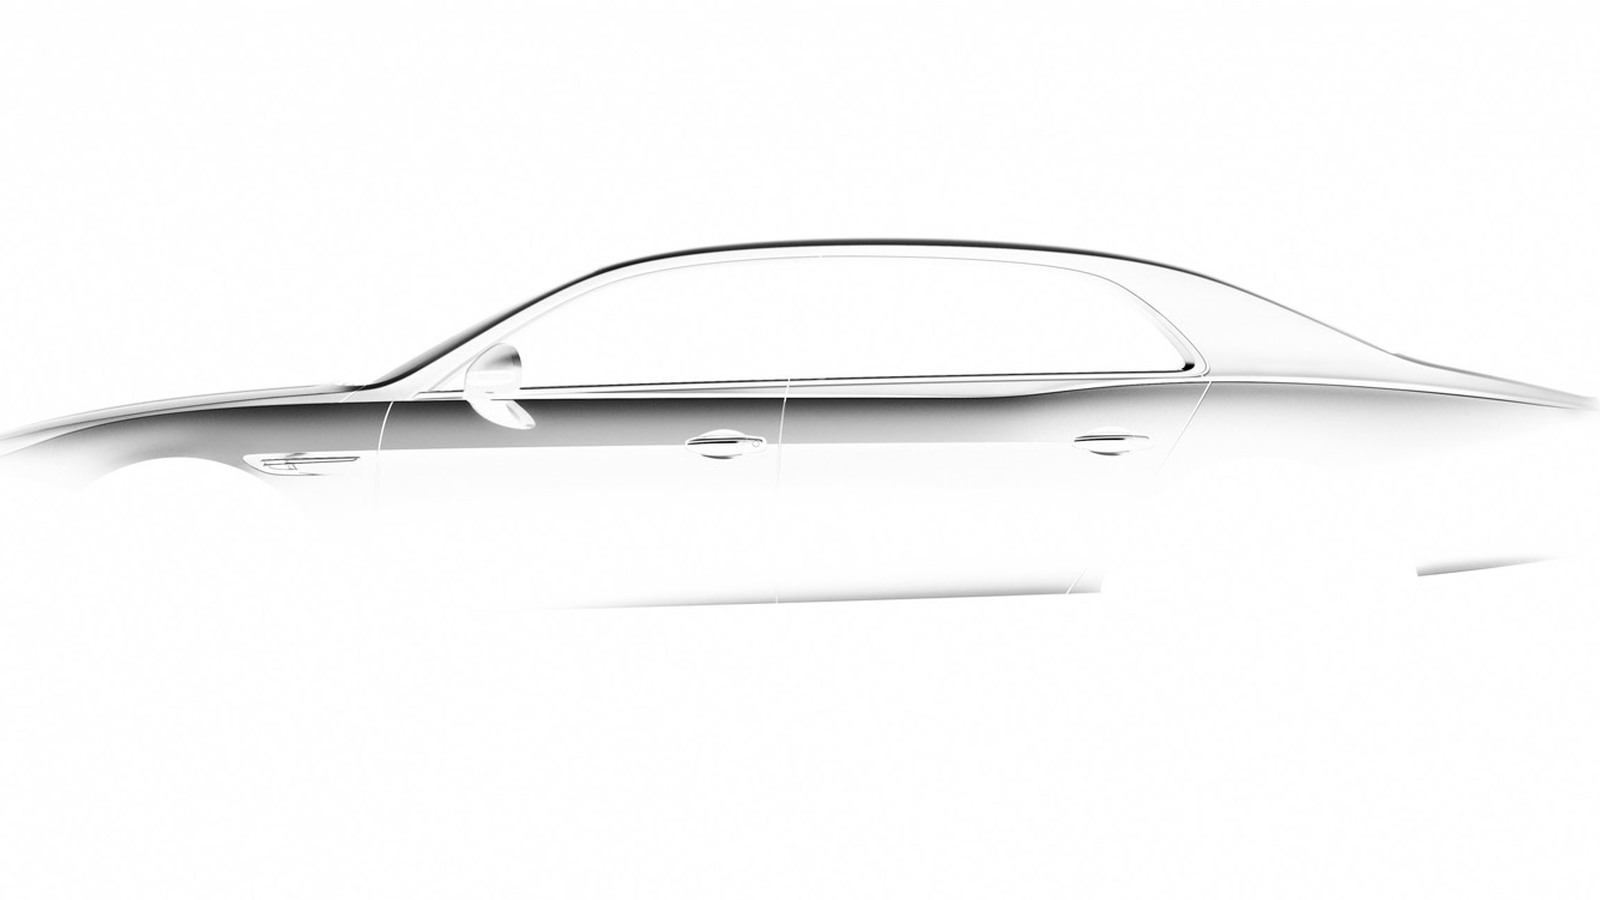 Teaser for 2014 Bentley Continental Flying Spur